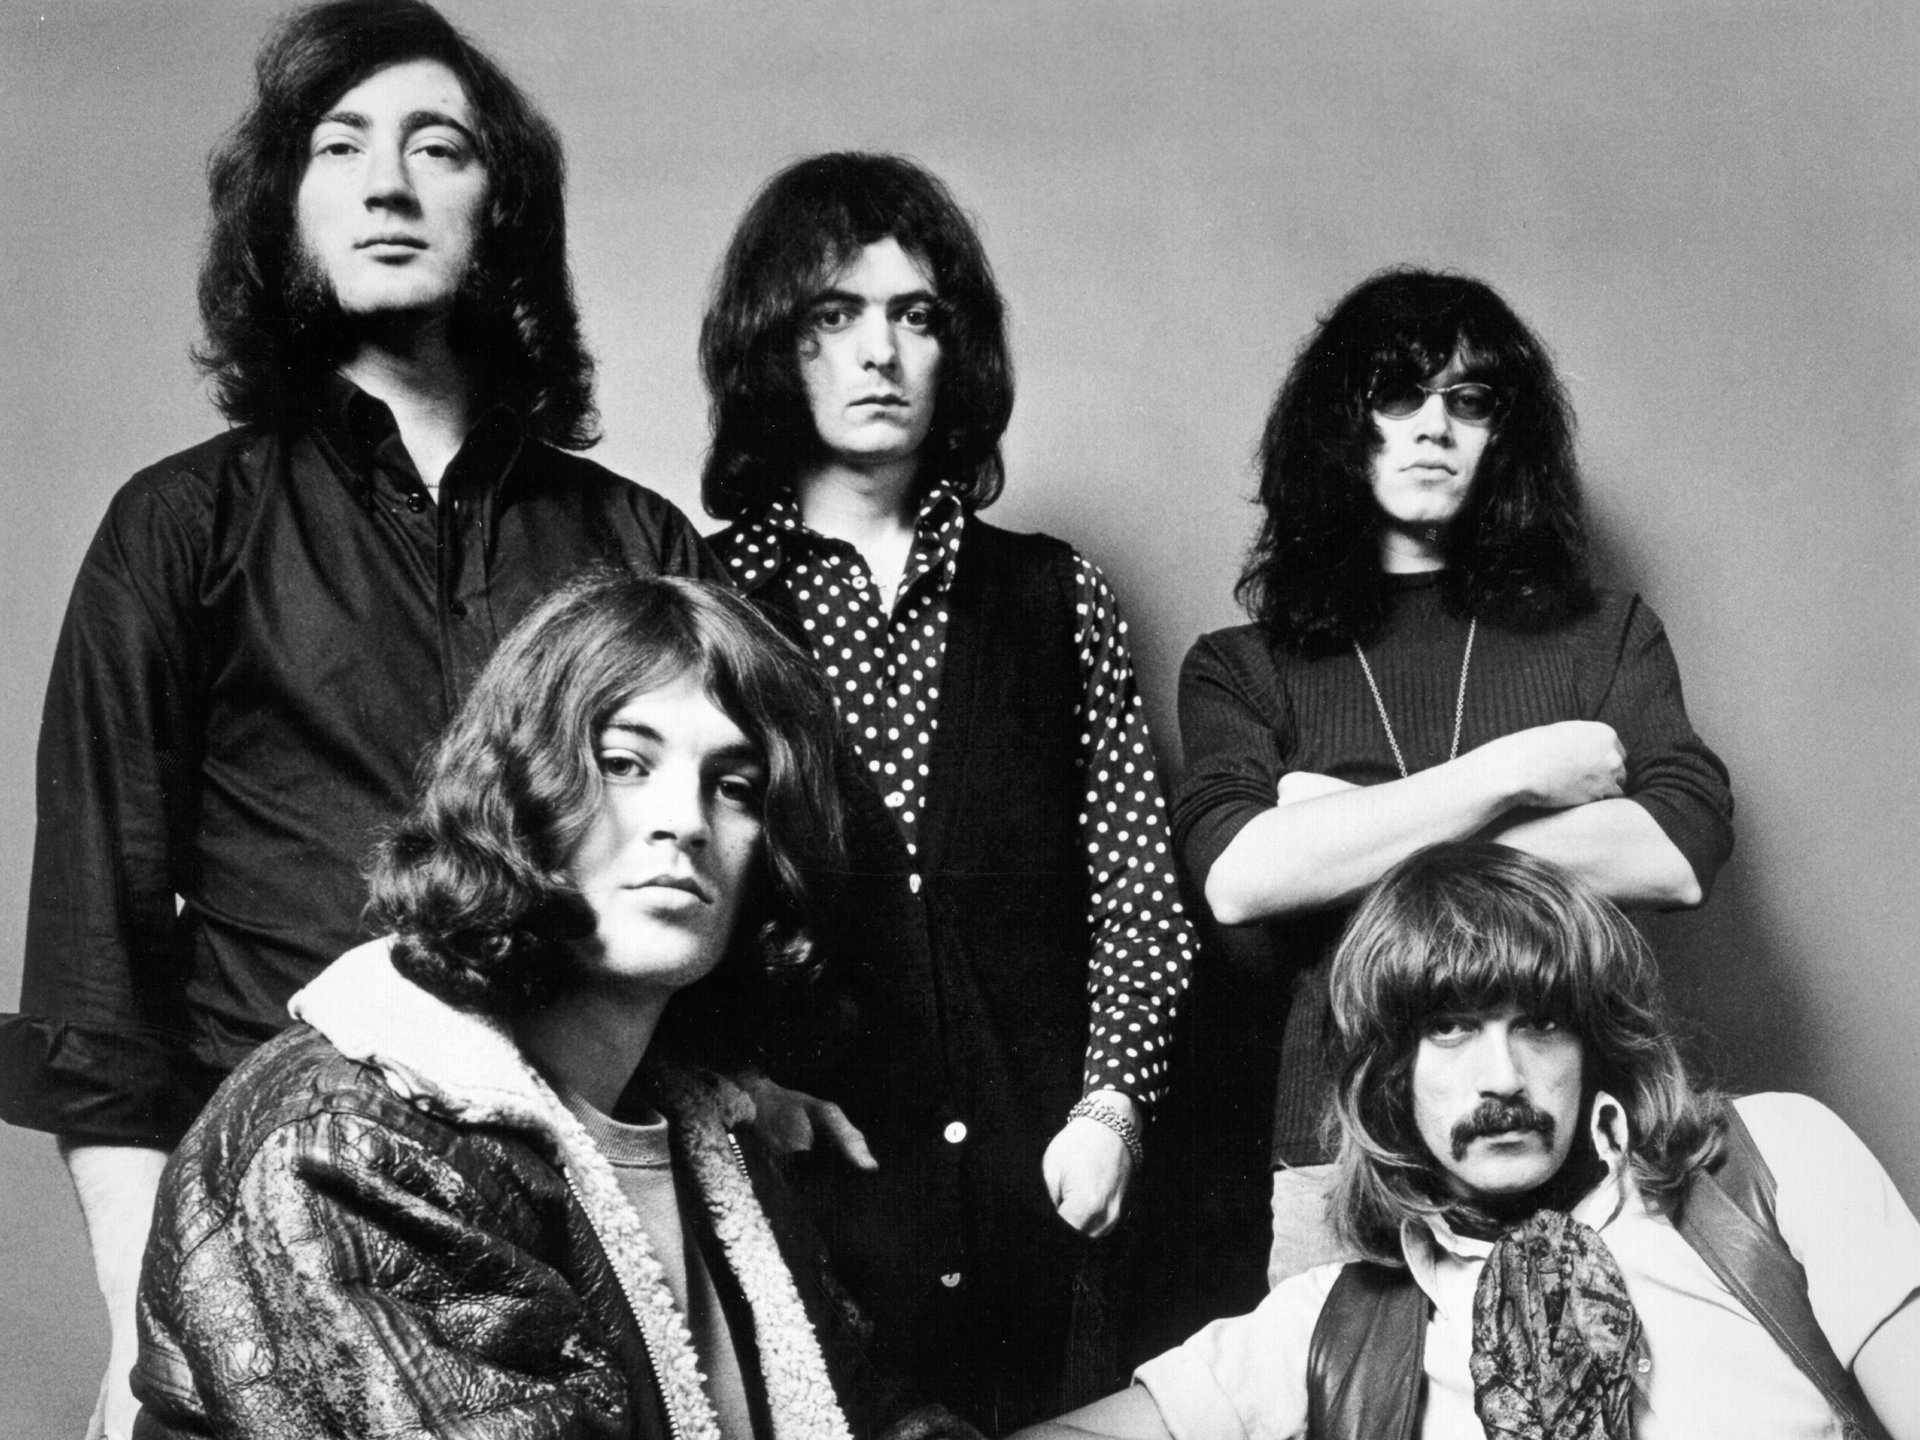 Купить дип перпл. Дип перпл. Группа дип перпл. Группа Deep Purple 1970. Deep Purple 70е.